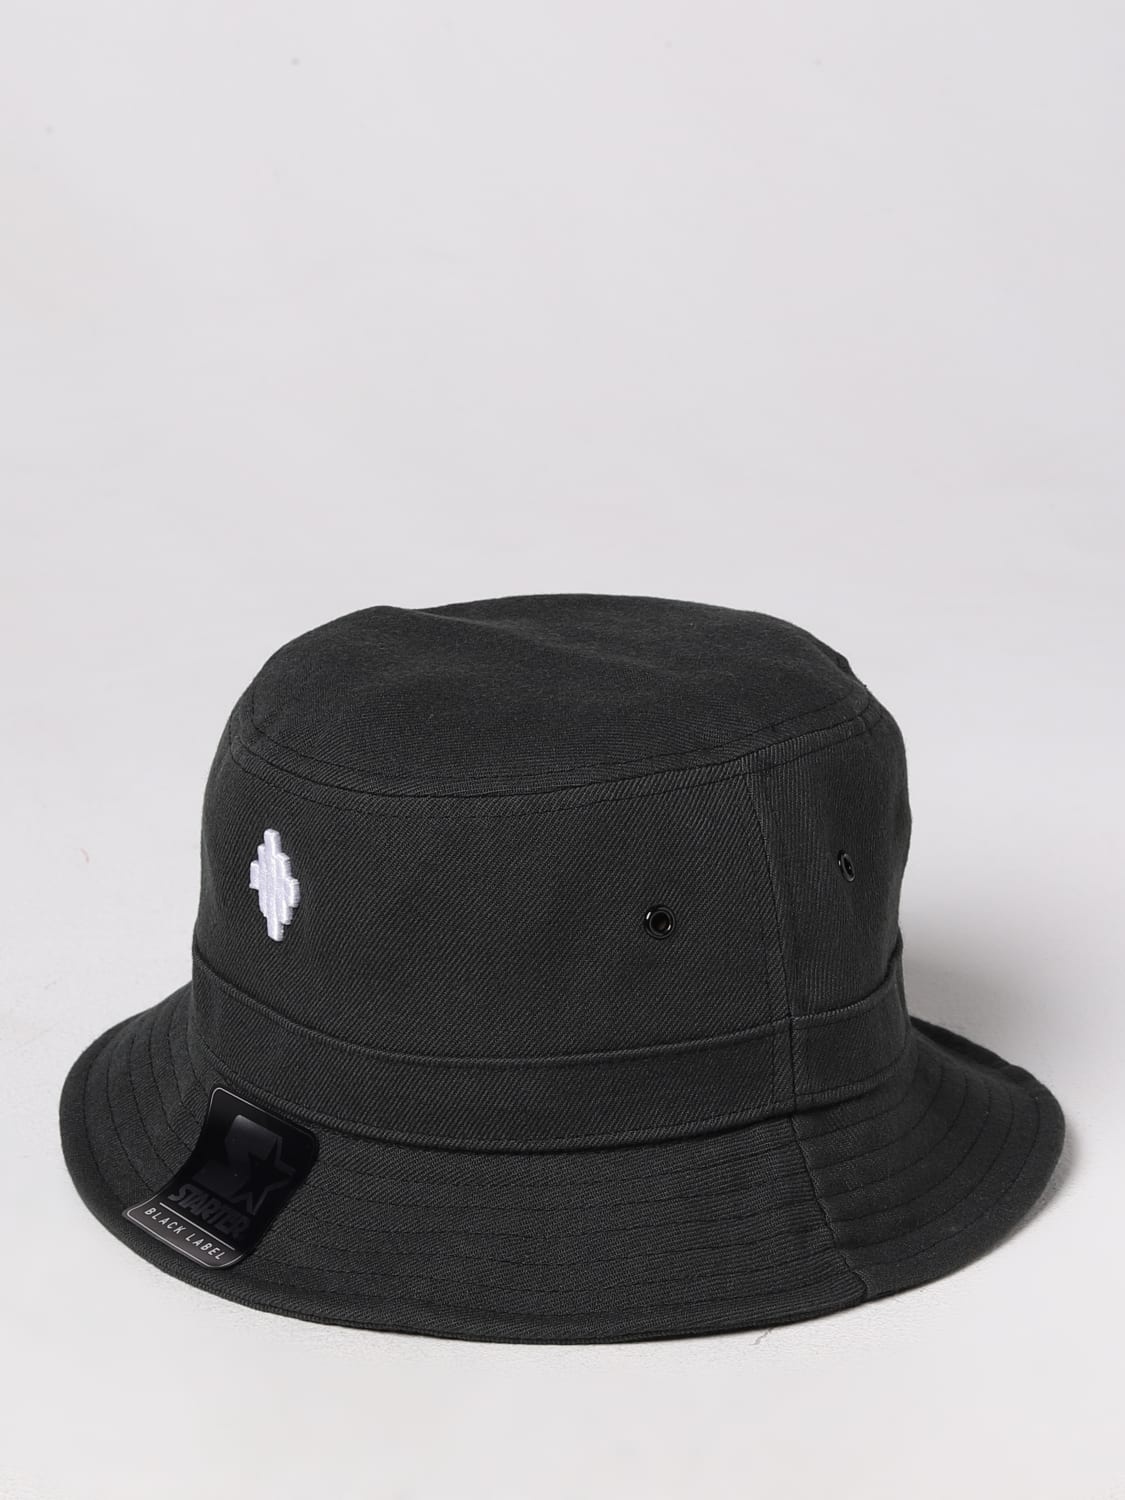 Marcelo Burlon hat for man - 1